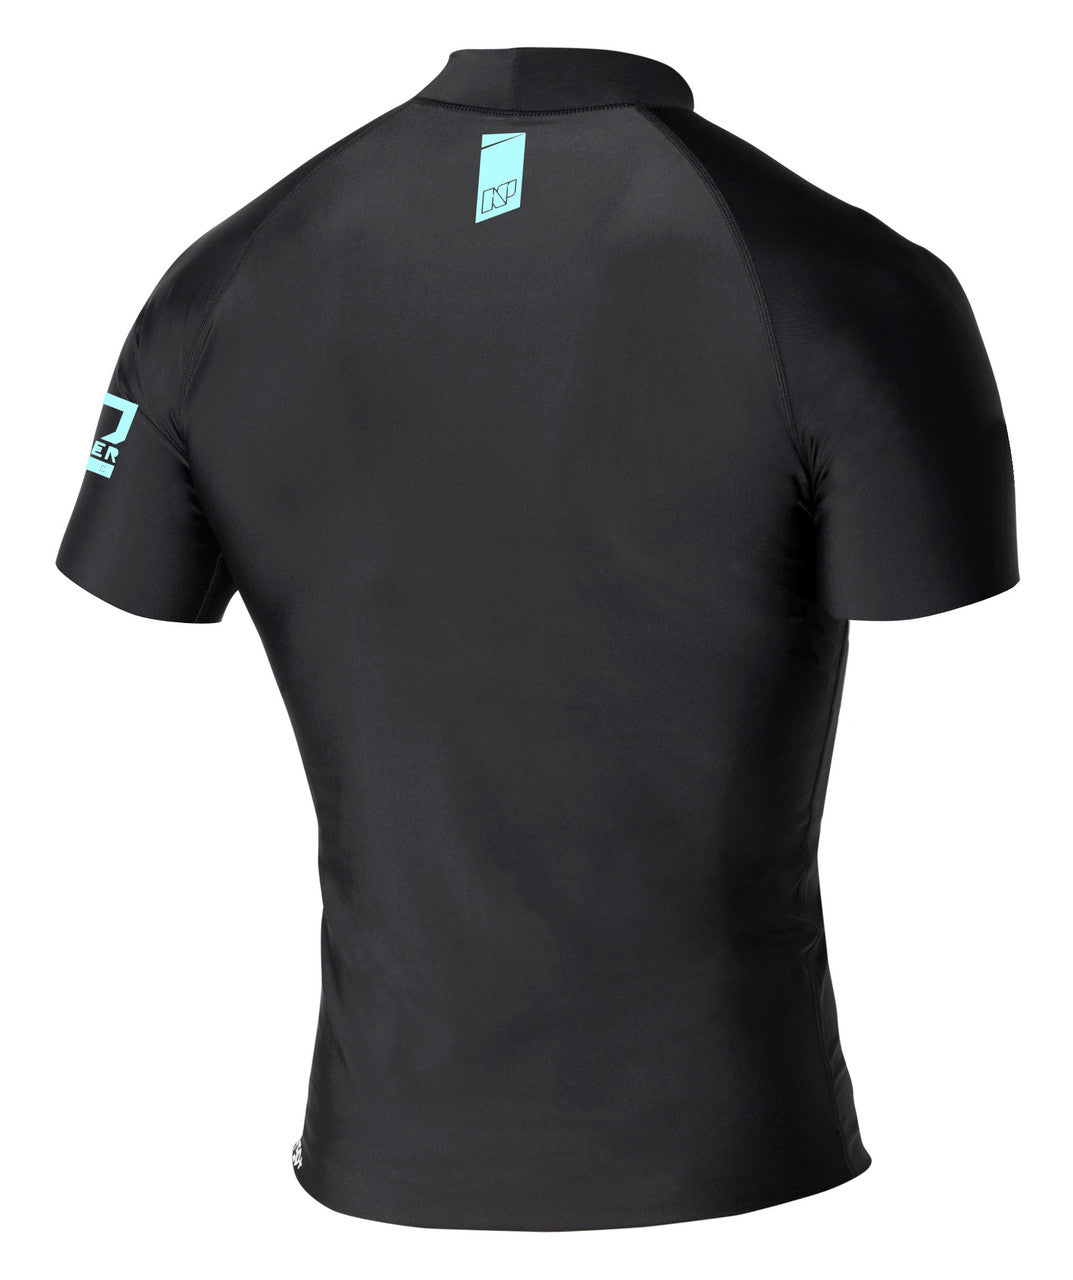 Neil Pryde / NP Contender Short Sleeve Black Soft Rashguard shirt 70% off